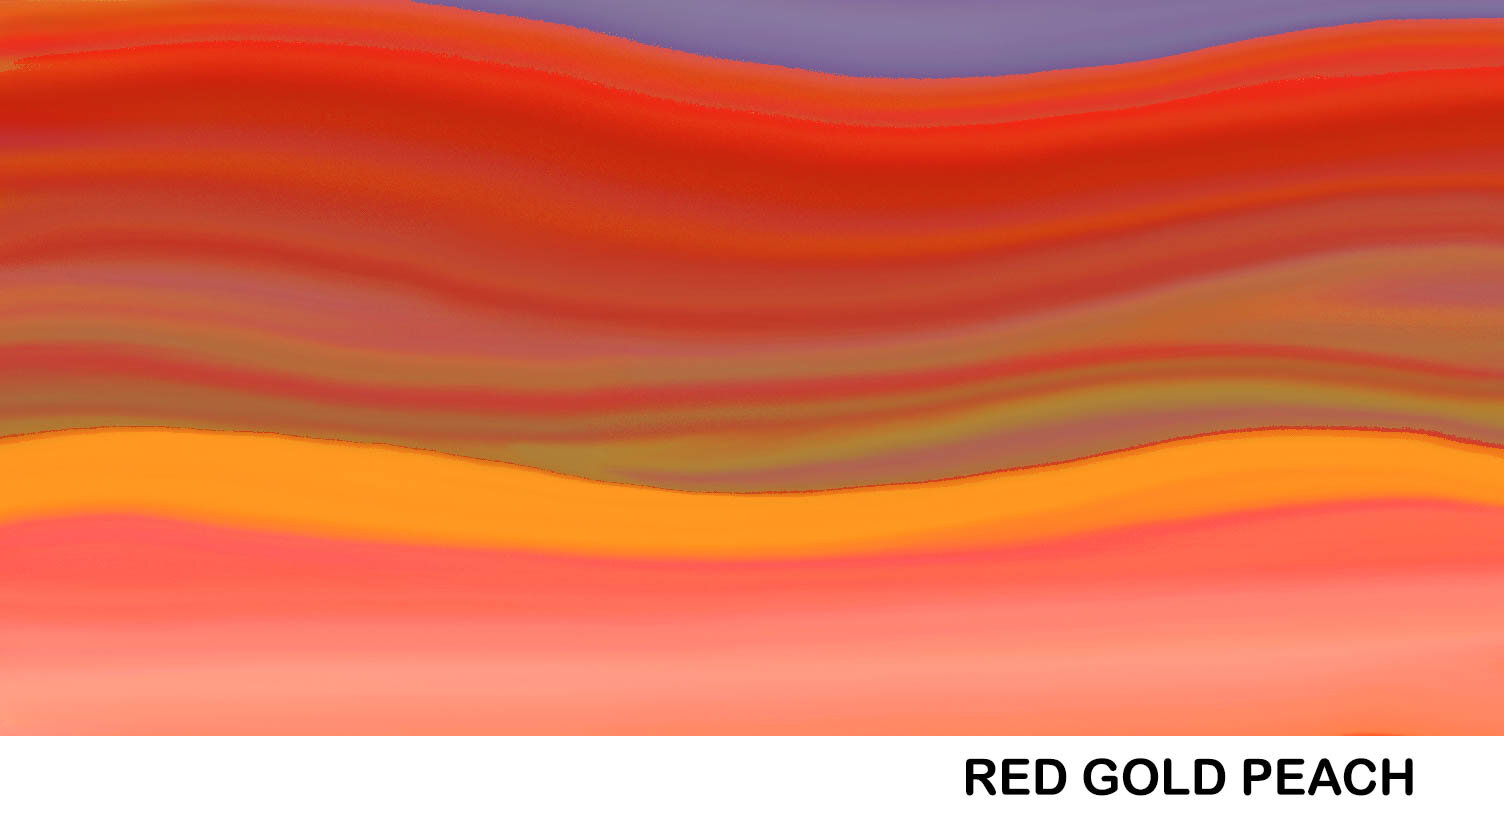 Red-gold-peach Titled.jpg